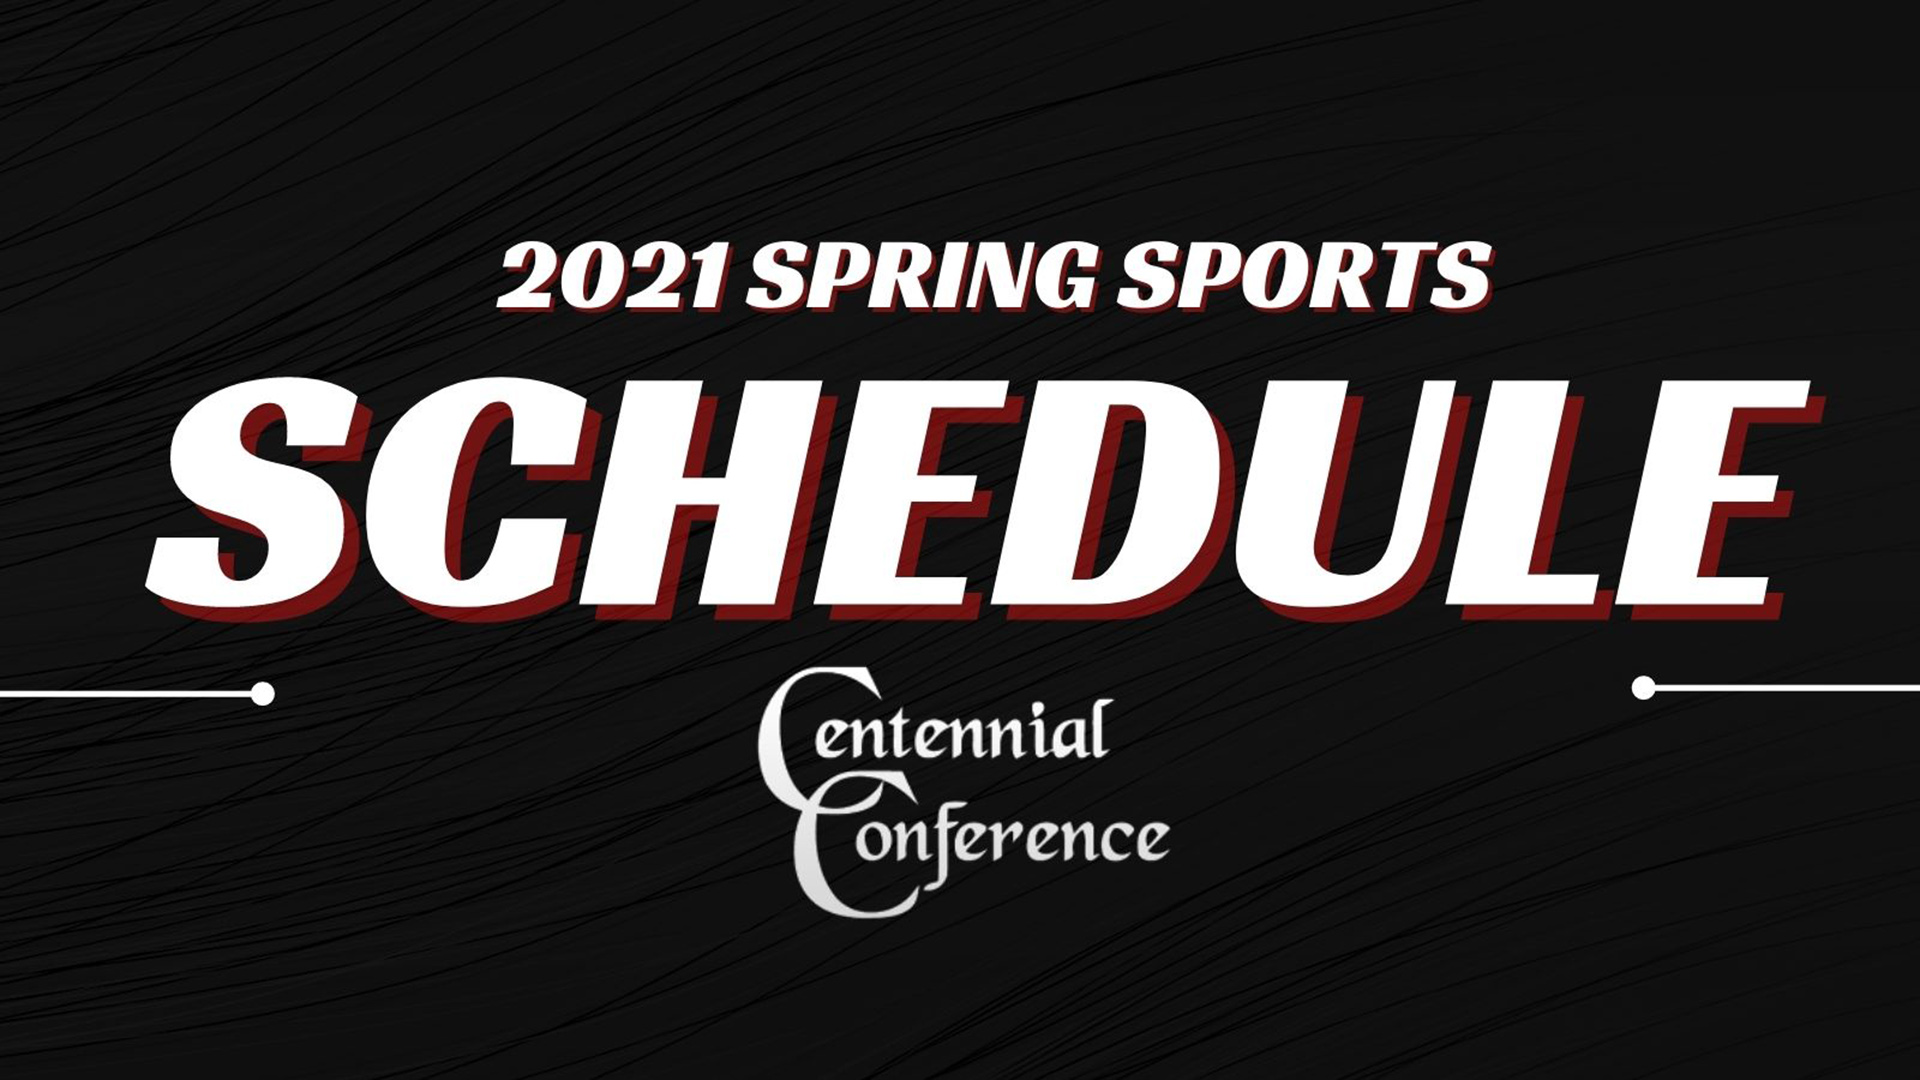 Centennial Conference Announces Spring Schedules